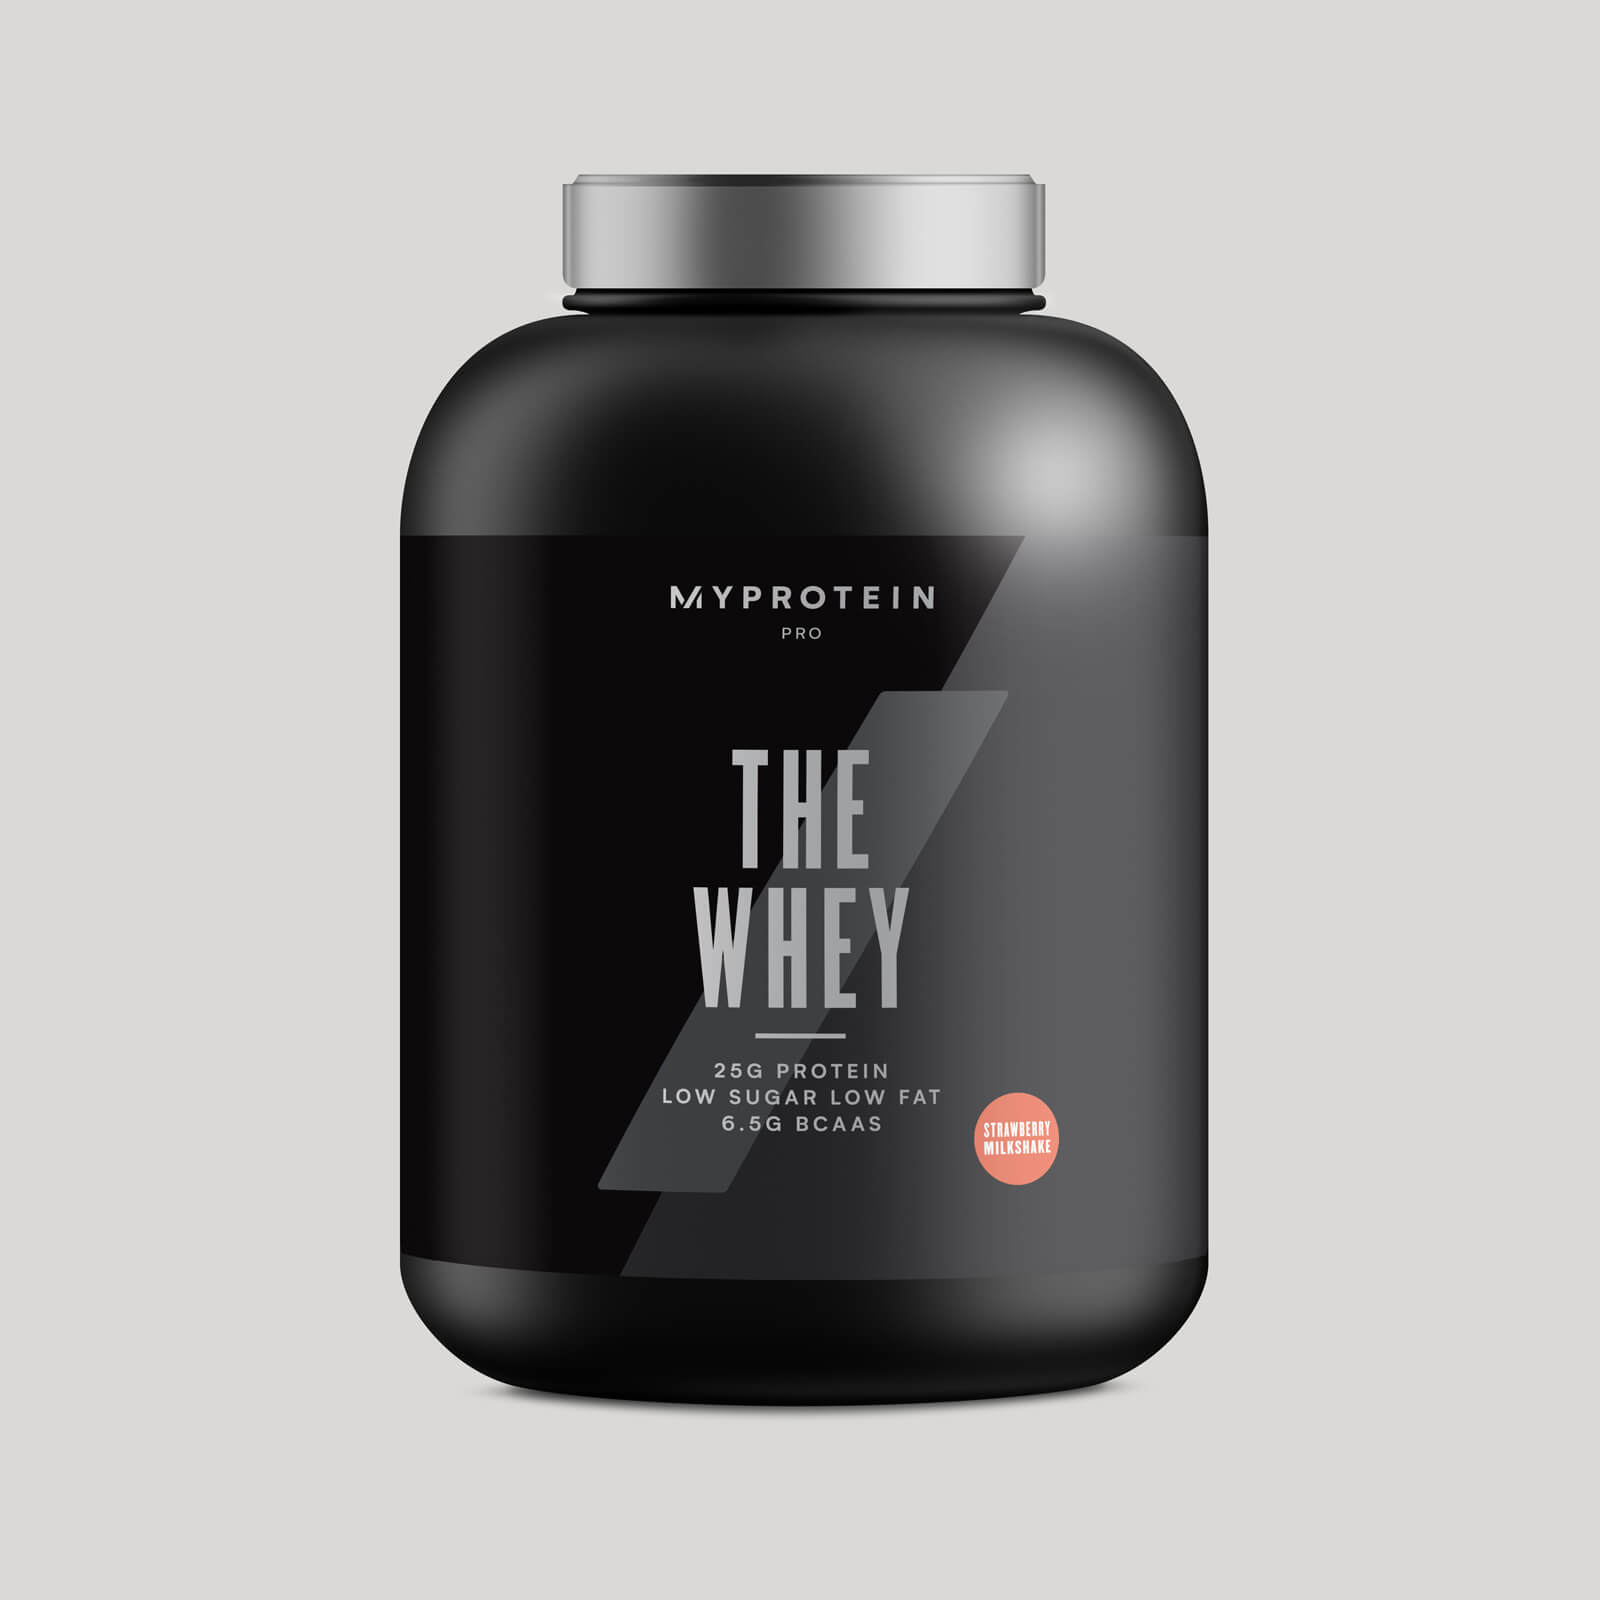 Myprotein THE Whey™ - 60 Servings - 1.74kg - Frullato alla fragola